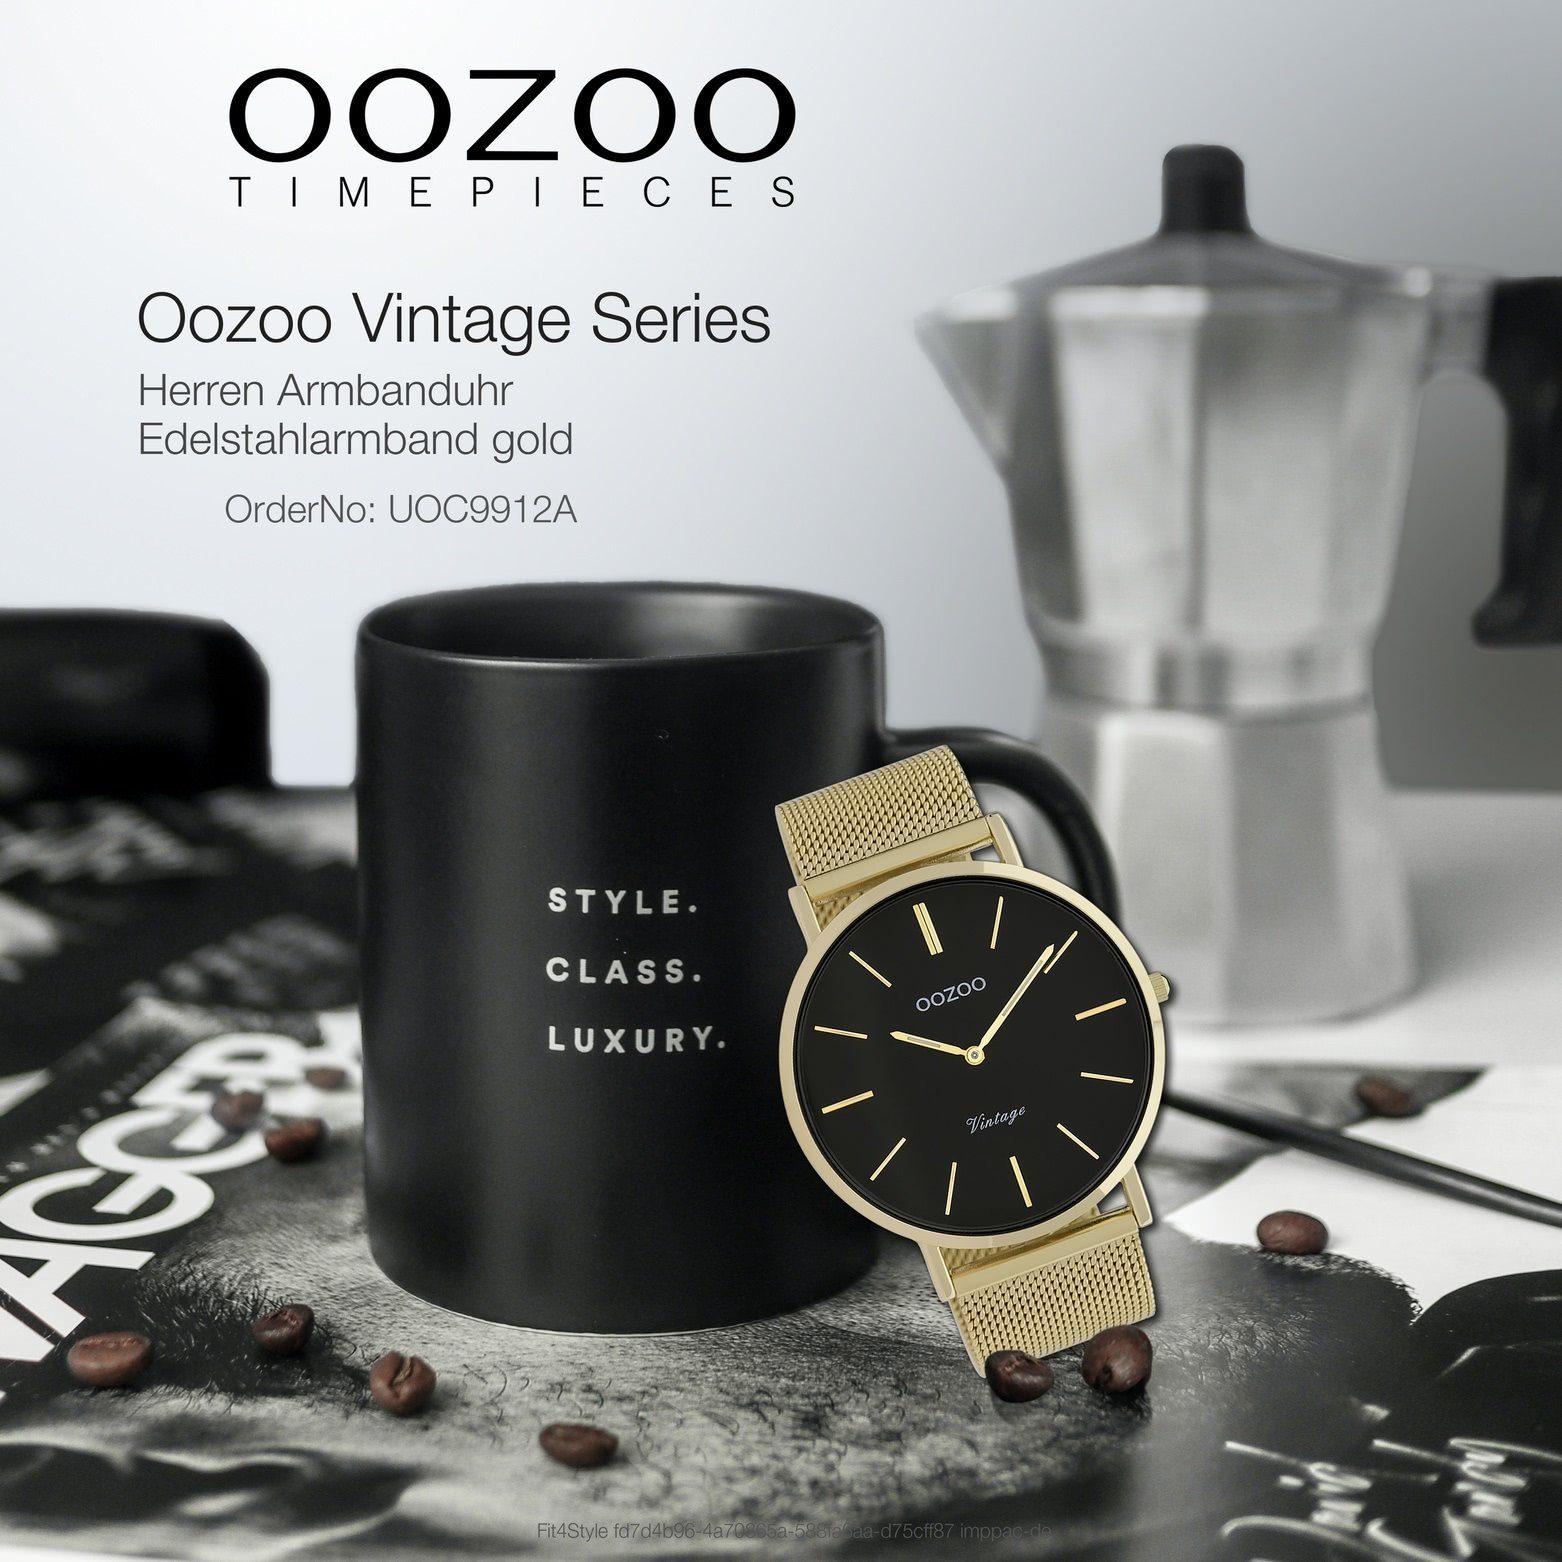 44mm) Fashion-Style Armbanduhr OOZOO Oozoo Herren gold Herrenuhr groß rund, Edelstahlarmband, Analog, Quarzuhr (ca.